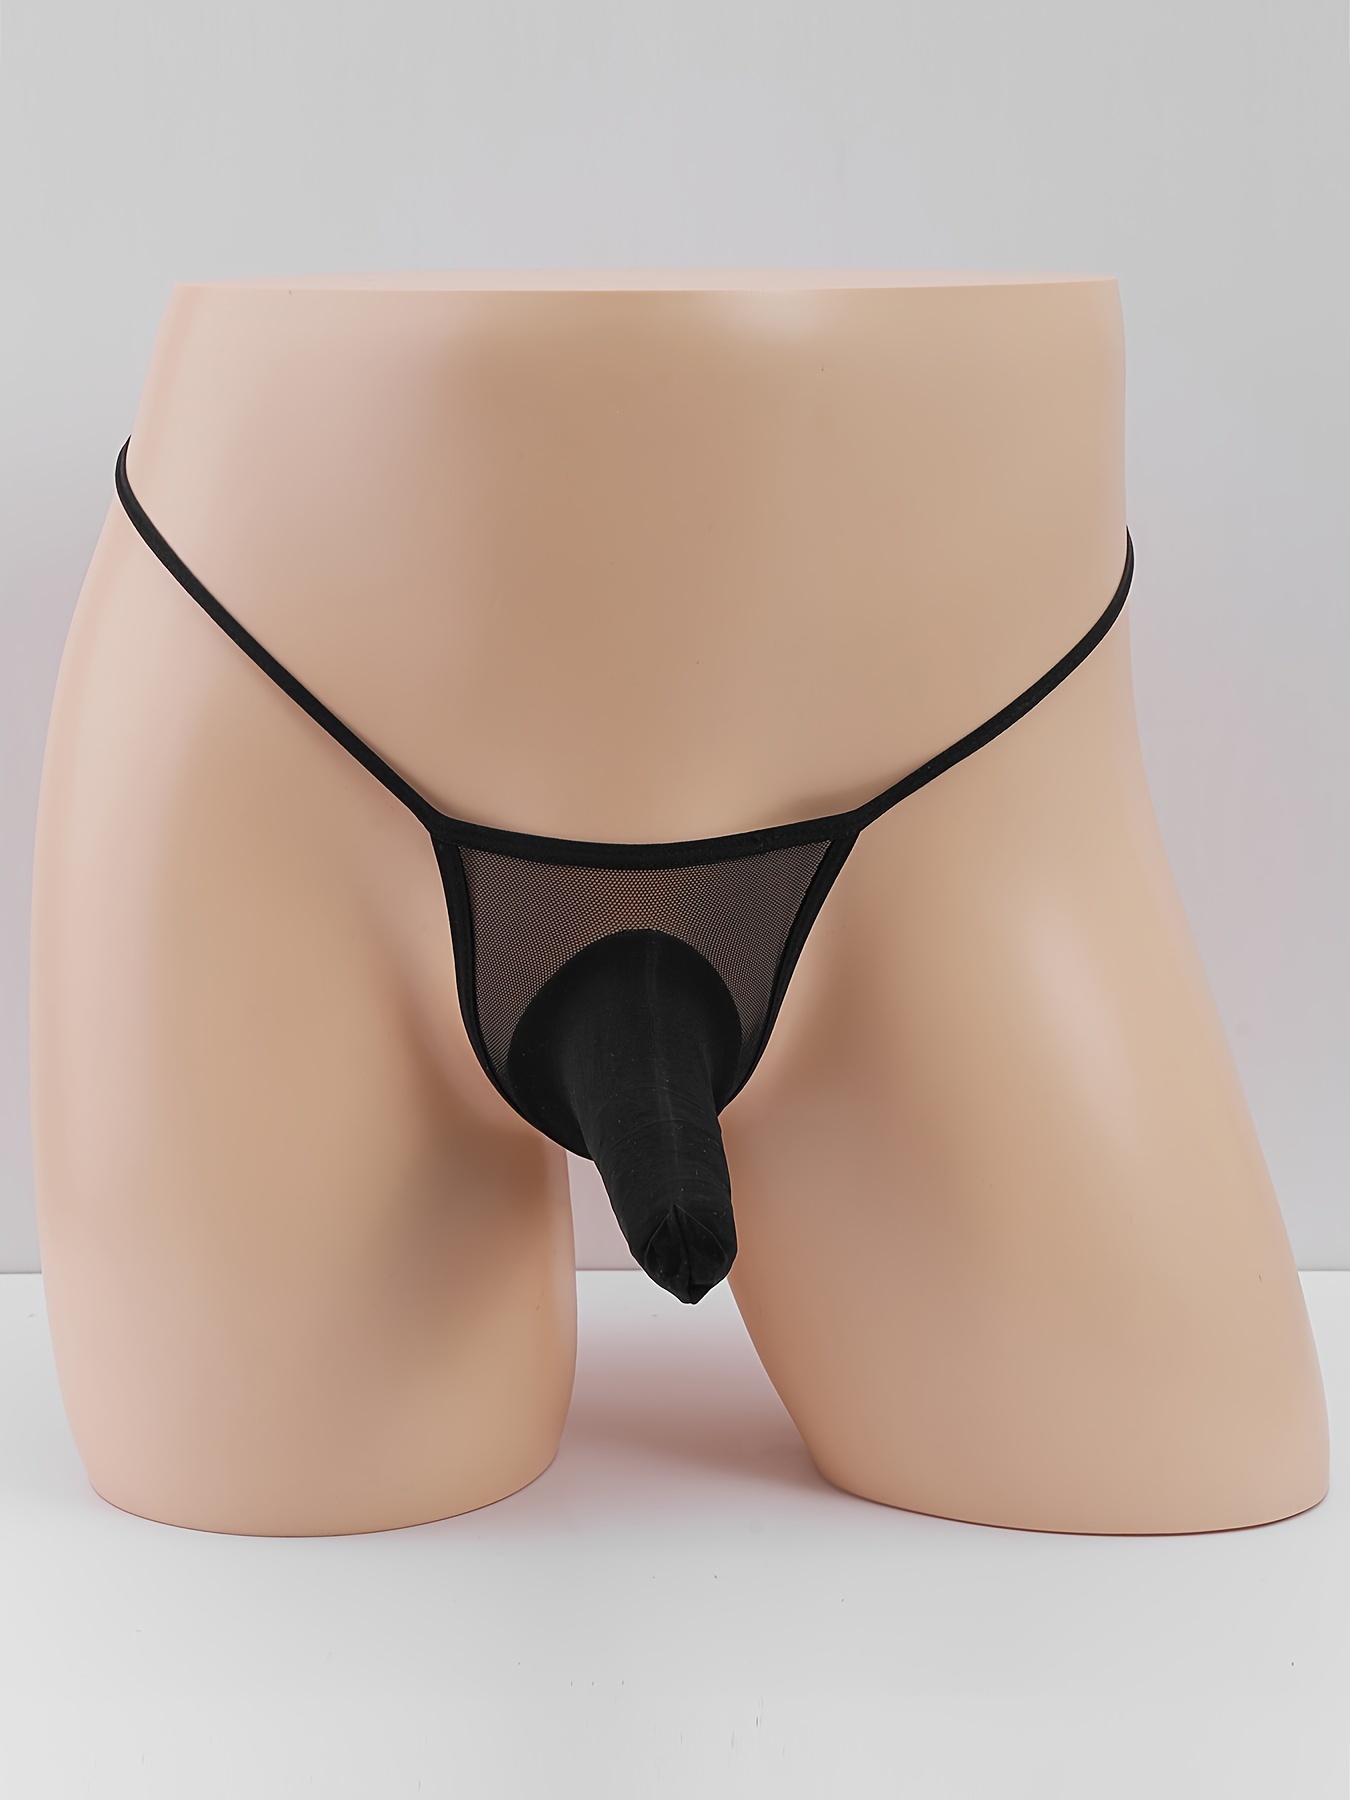 Men's Funny Panties Sexy Elephant Bulge Pouch Elastic T Back